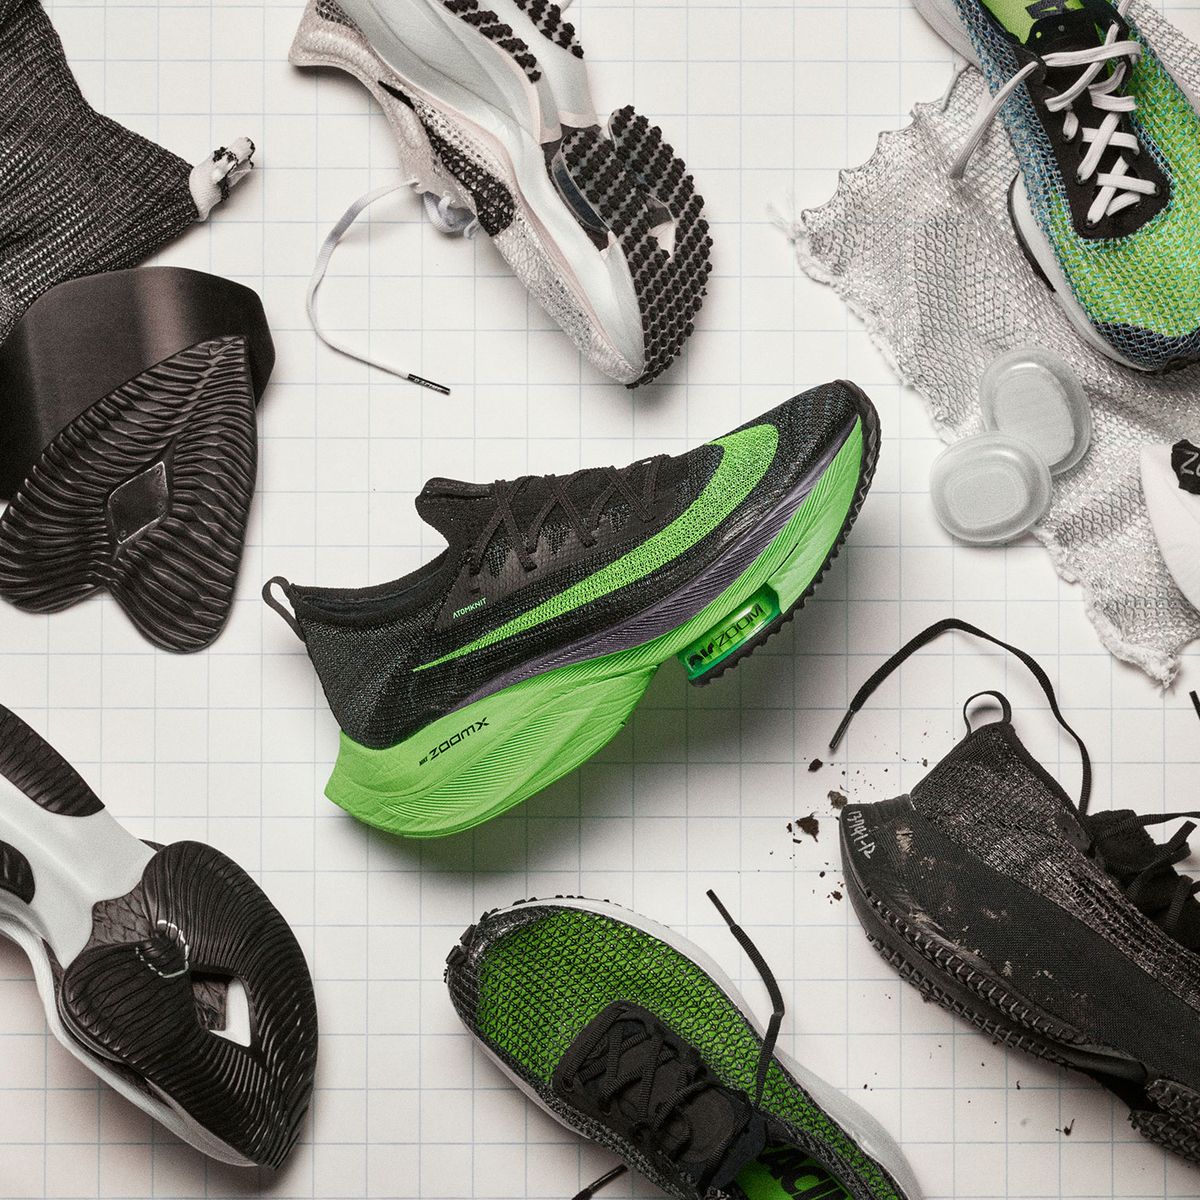 Agacharse Casco destacar Nike Alphafly NEXT%: las zapatillas de Eliud Kipchoge